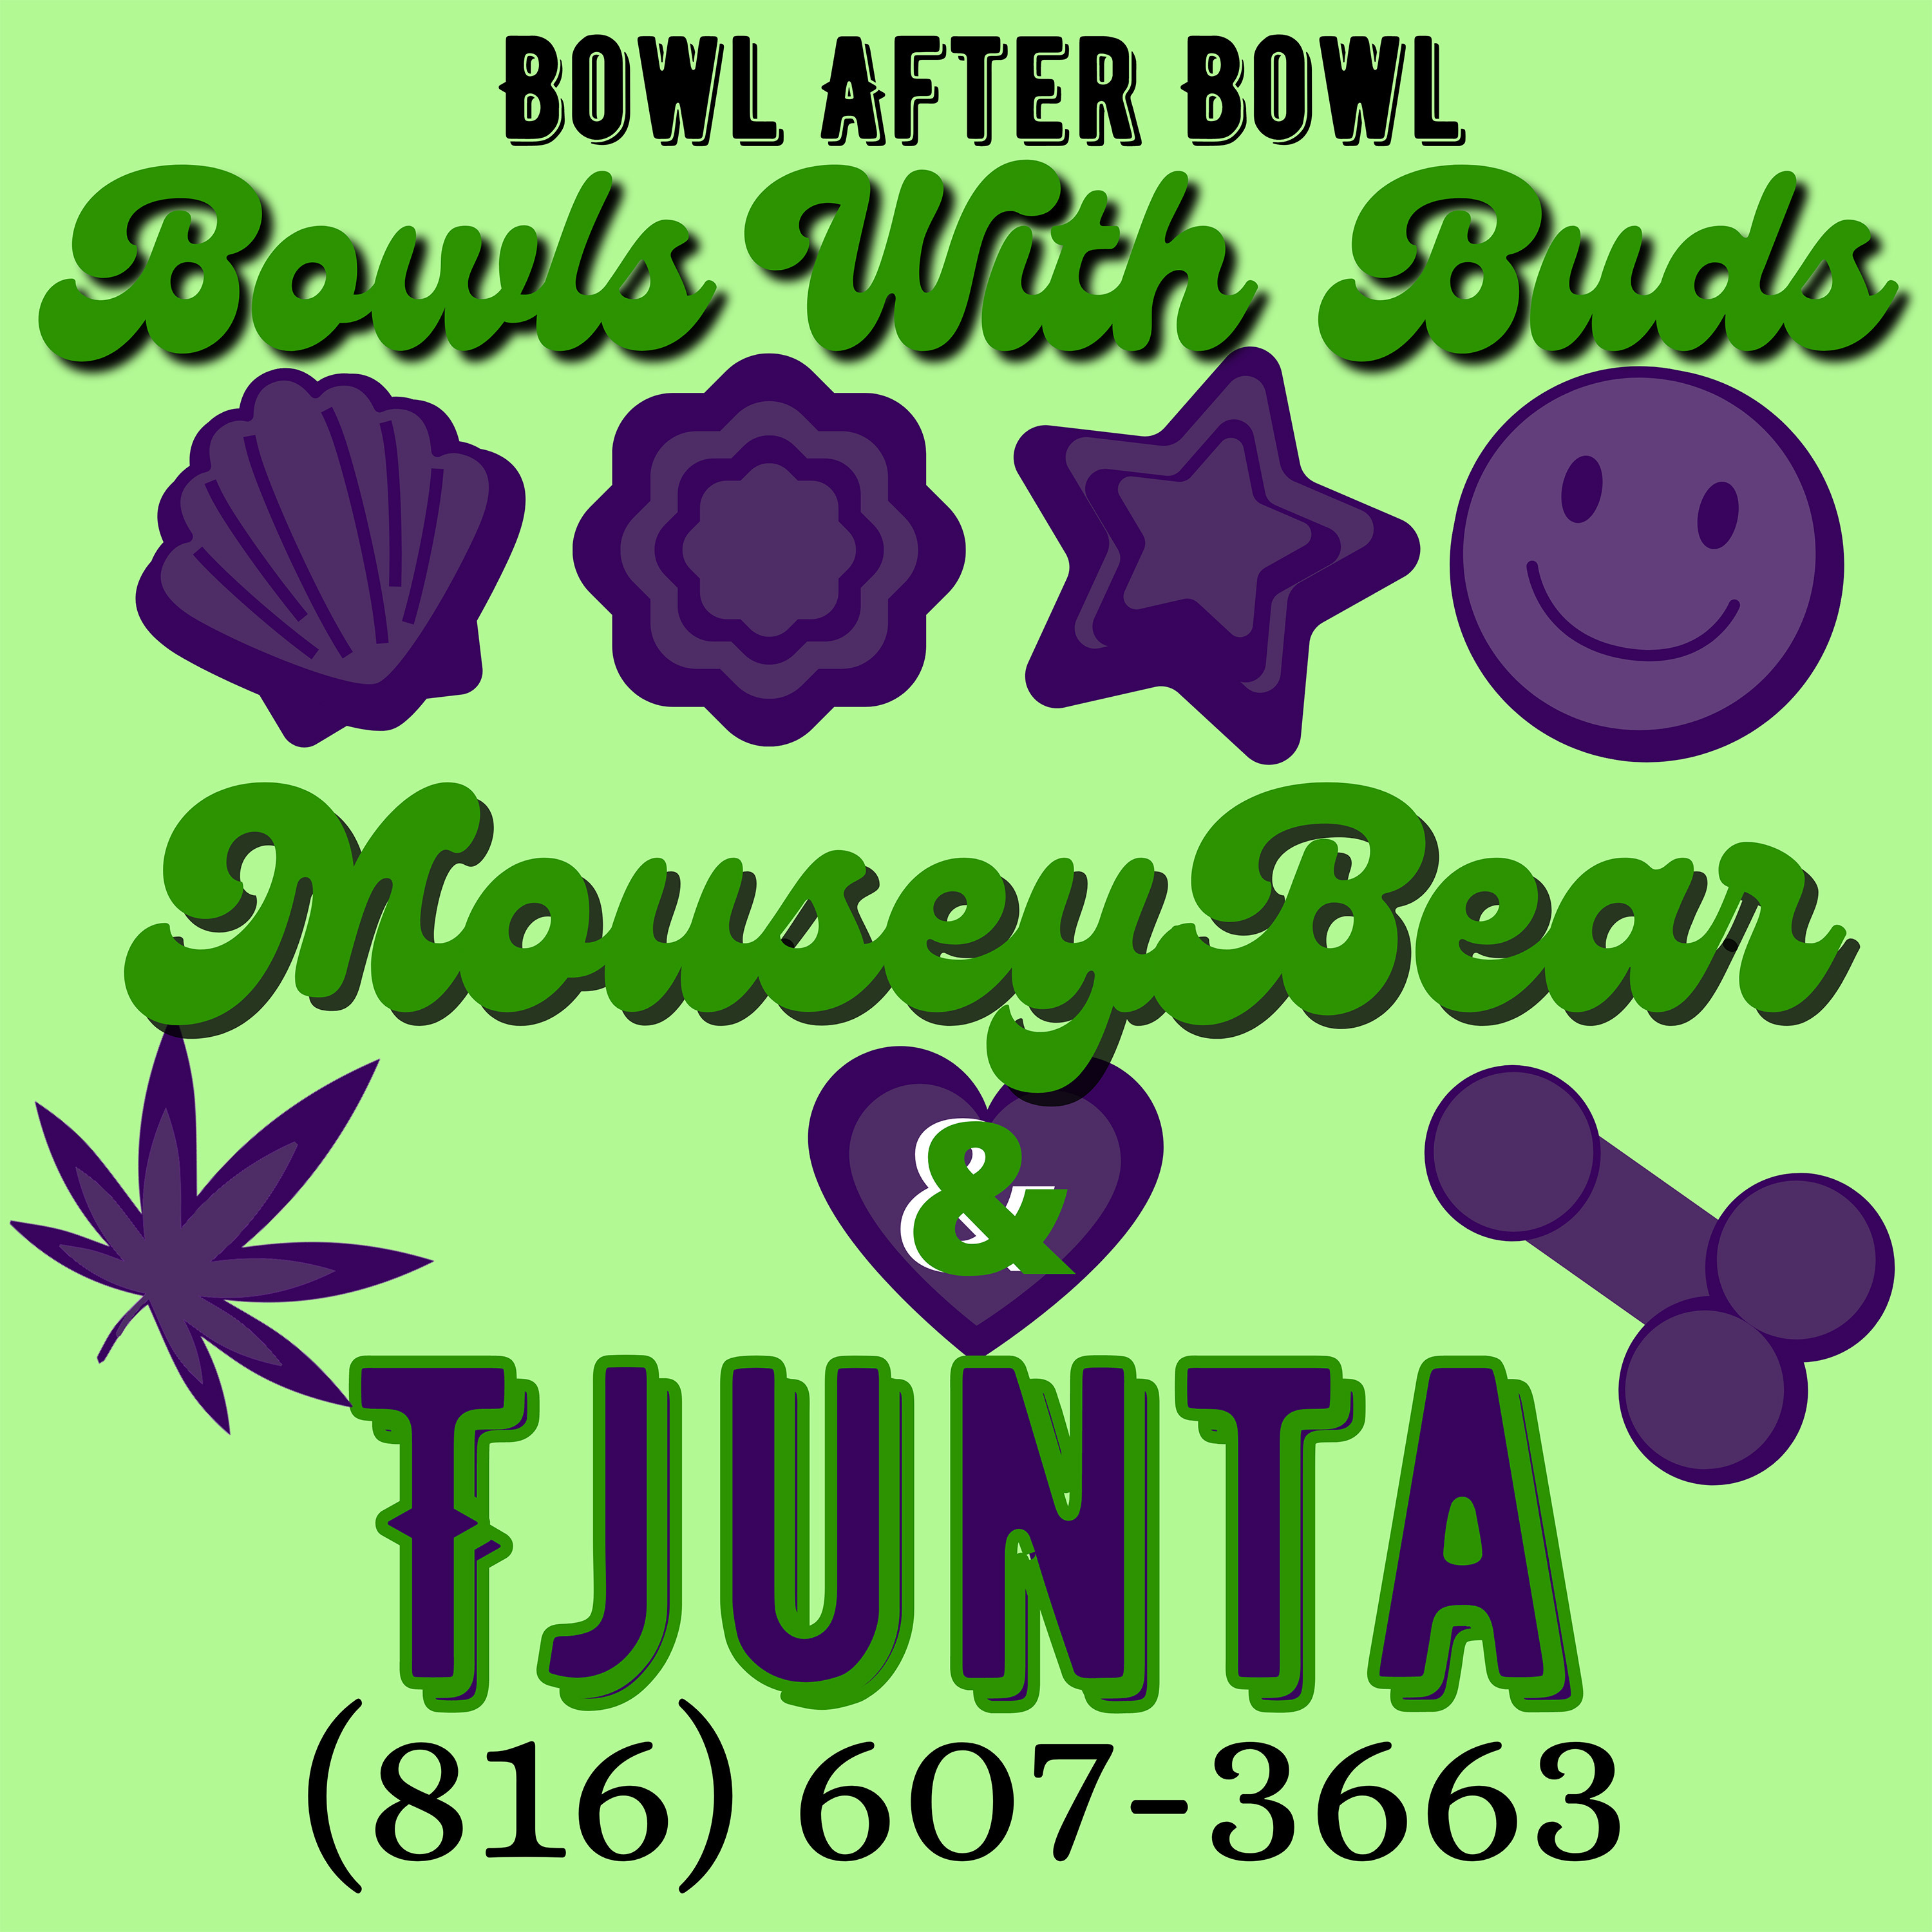 Episode 140 ★ Bowls With Buds ★ Mouseybear & Tjunta